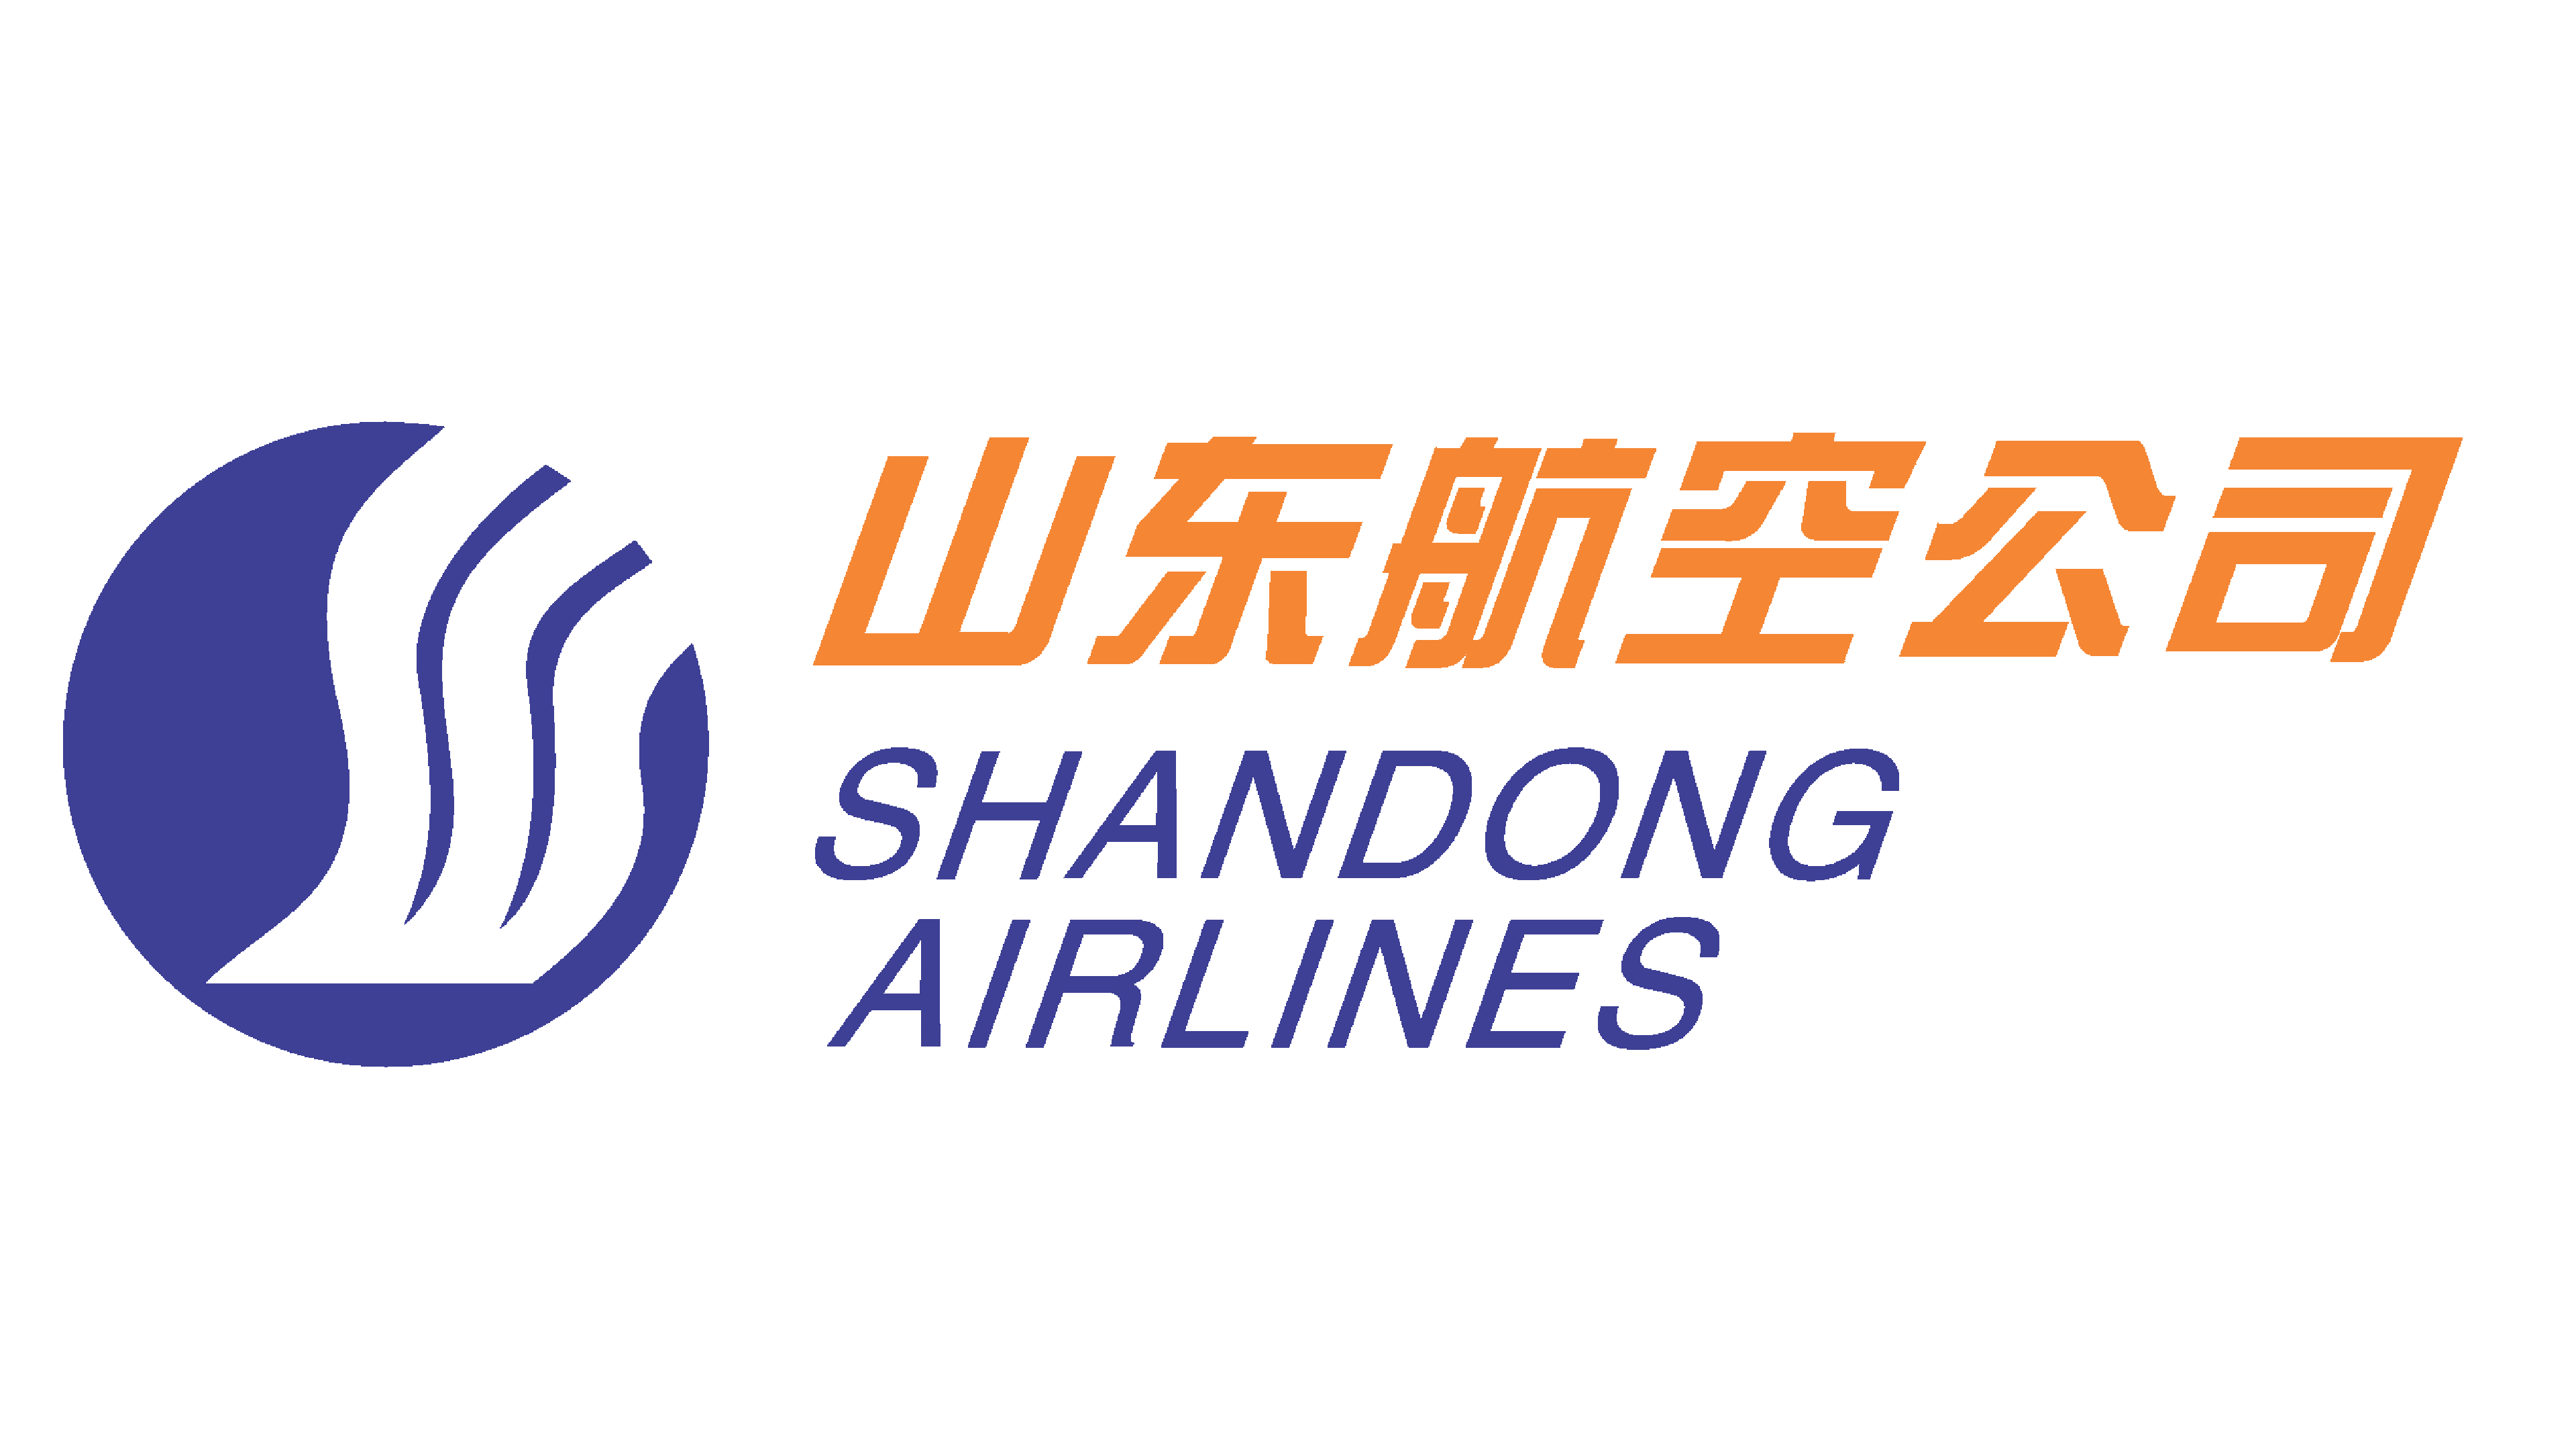 Logotipo de Shandong Airlines Logo